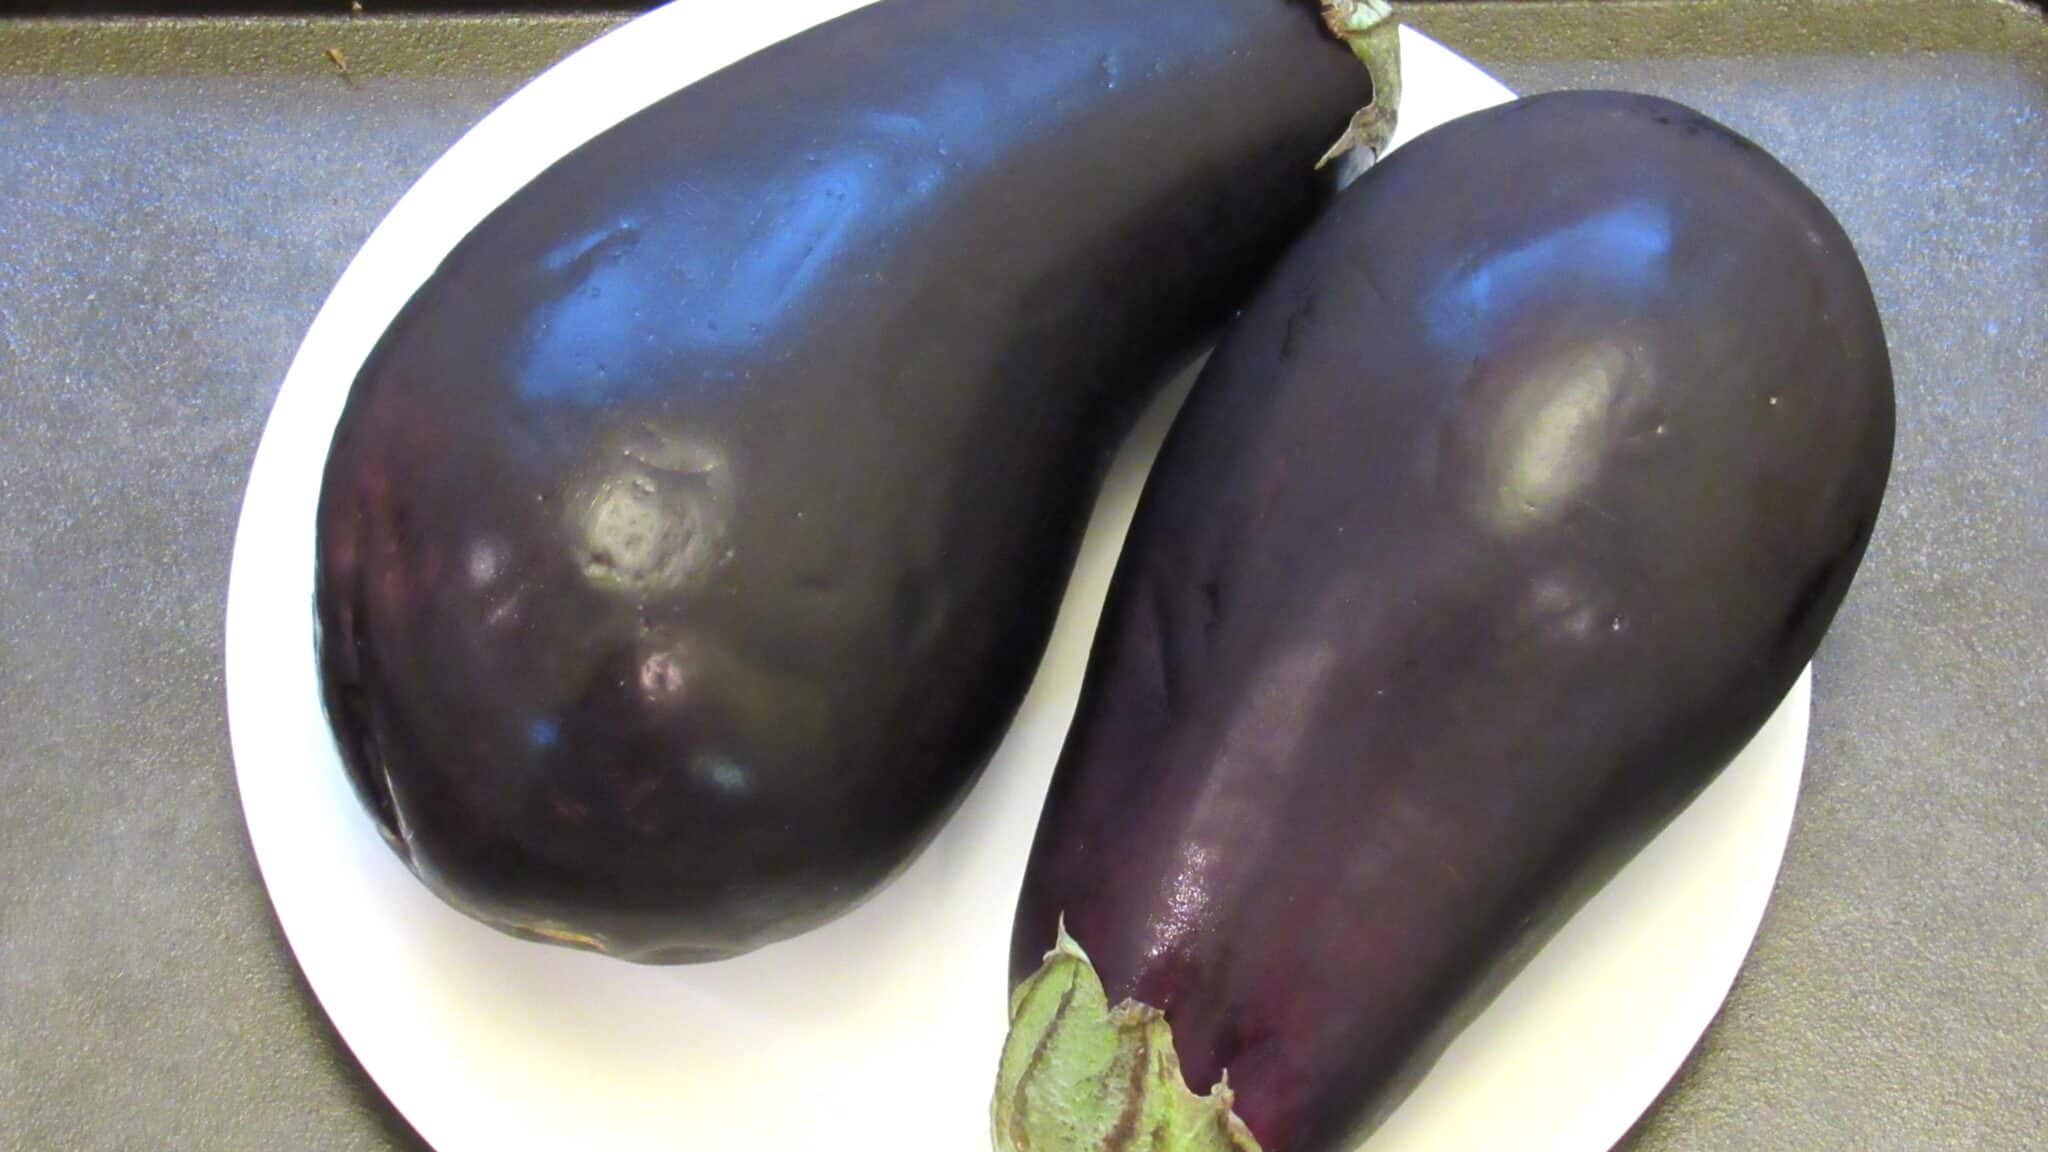 Two globe eggplants on a white plate